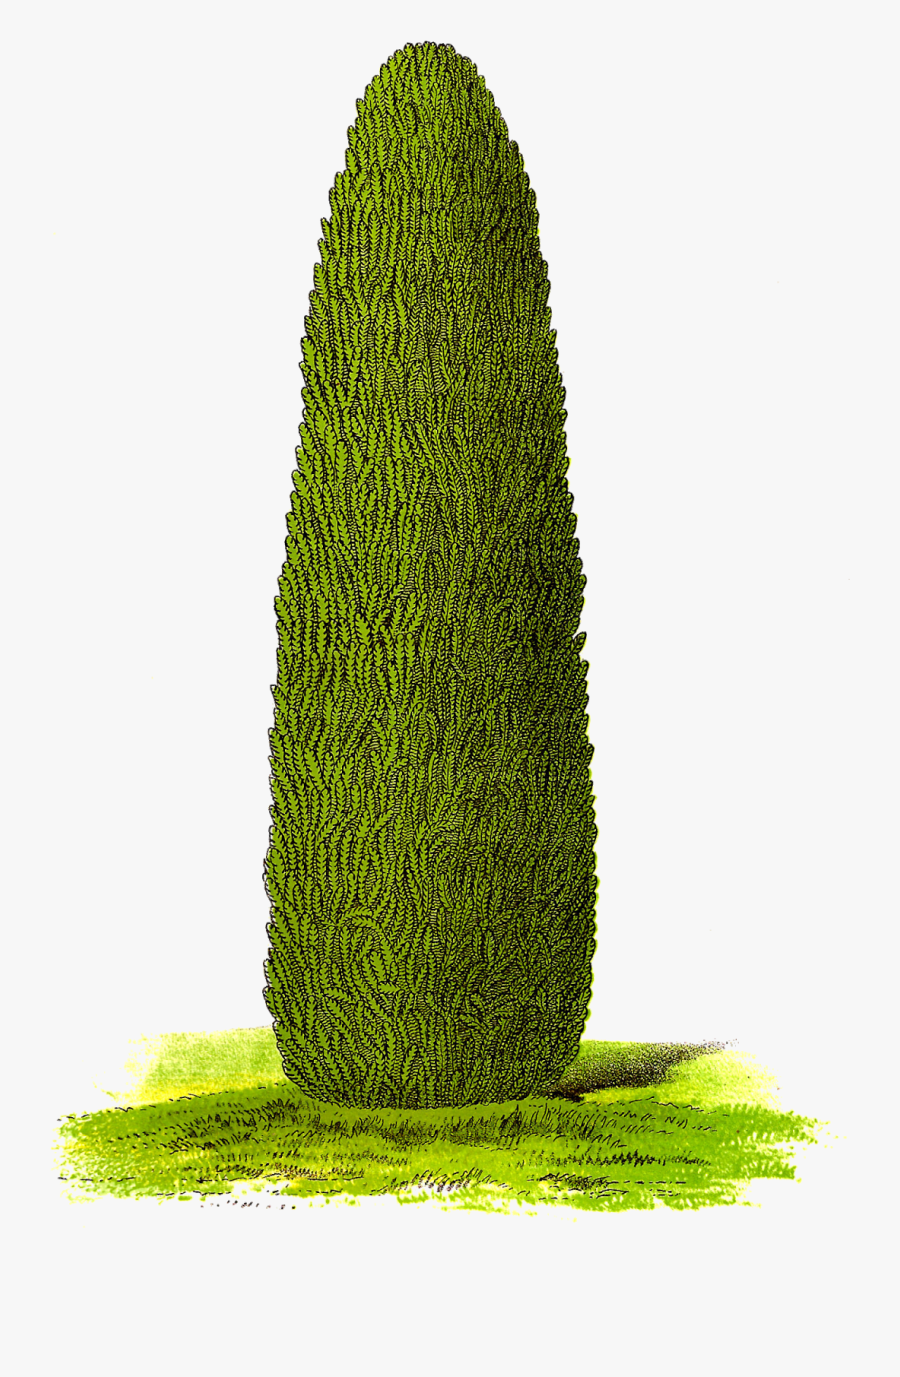 Tree Image Transfer Clipart Botanical Art Download - Clip Art, Transparent Clipart